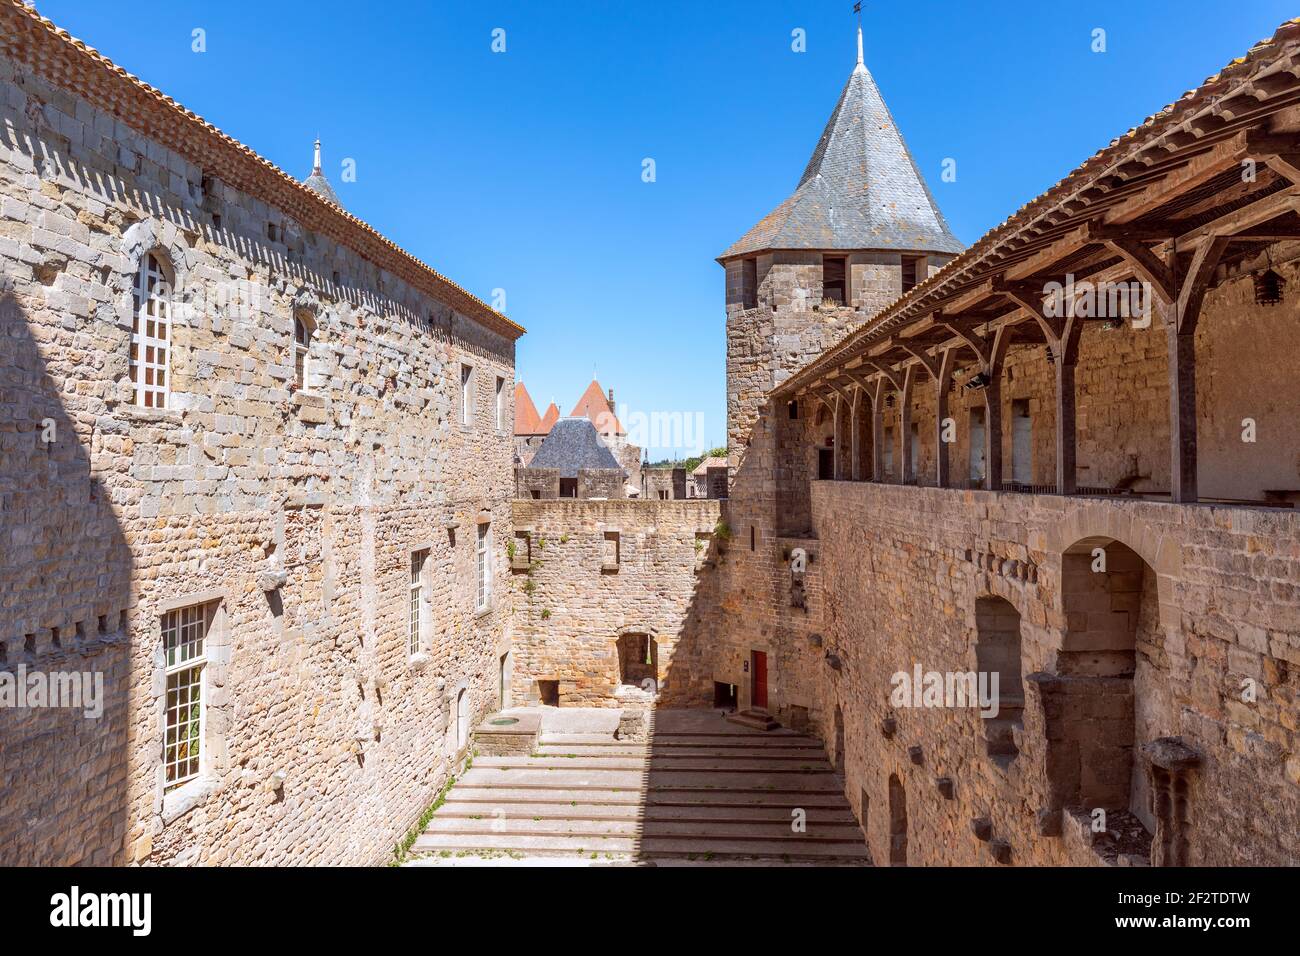 Ampie mura fortificate e torri di osservazione del castello medievale Di Carcassonne città Foto Stock